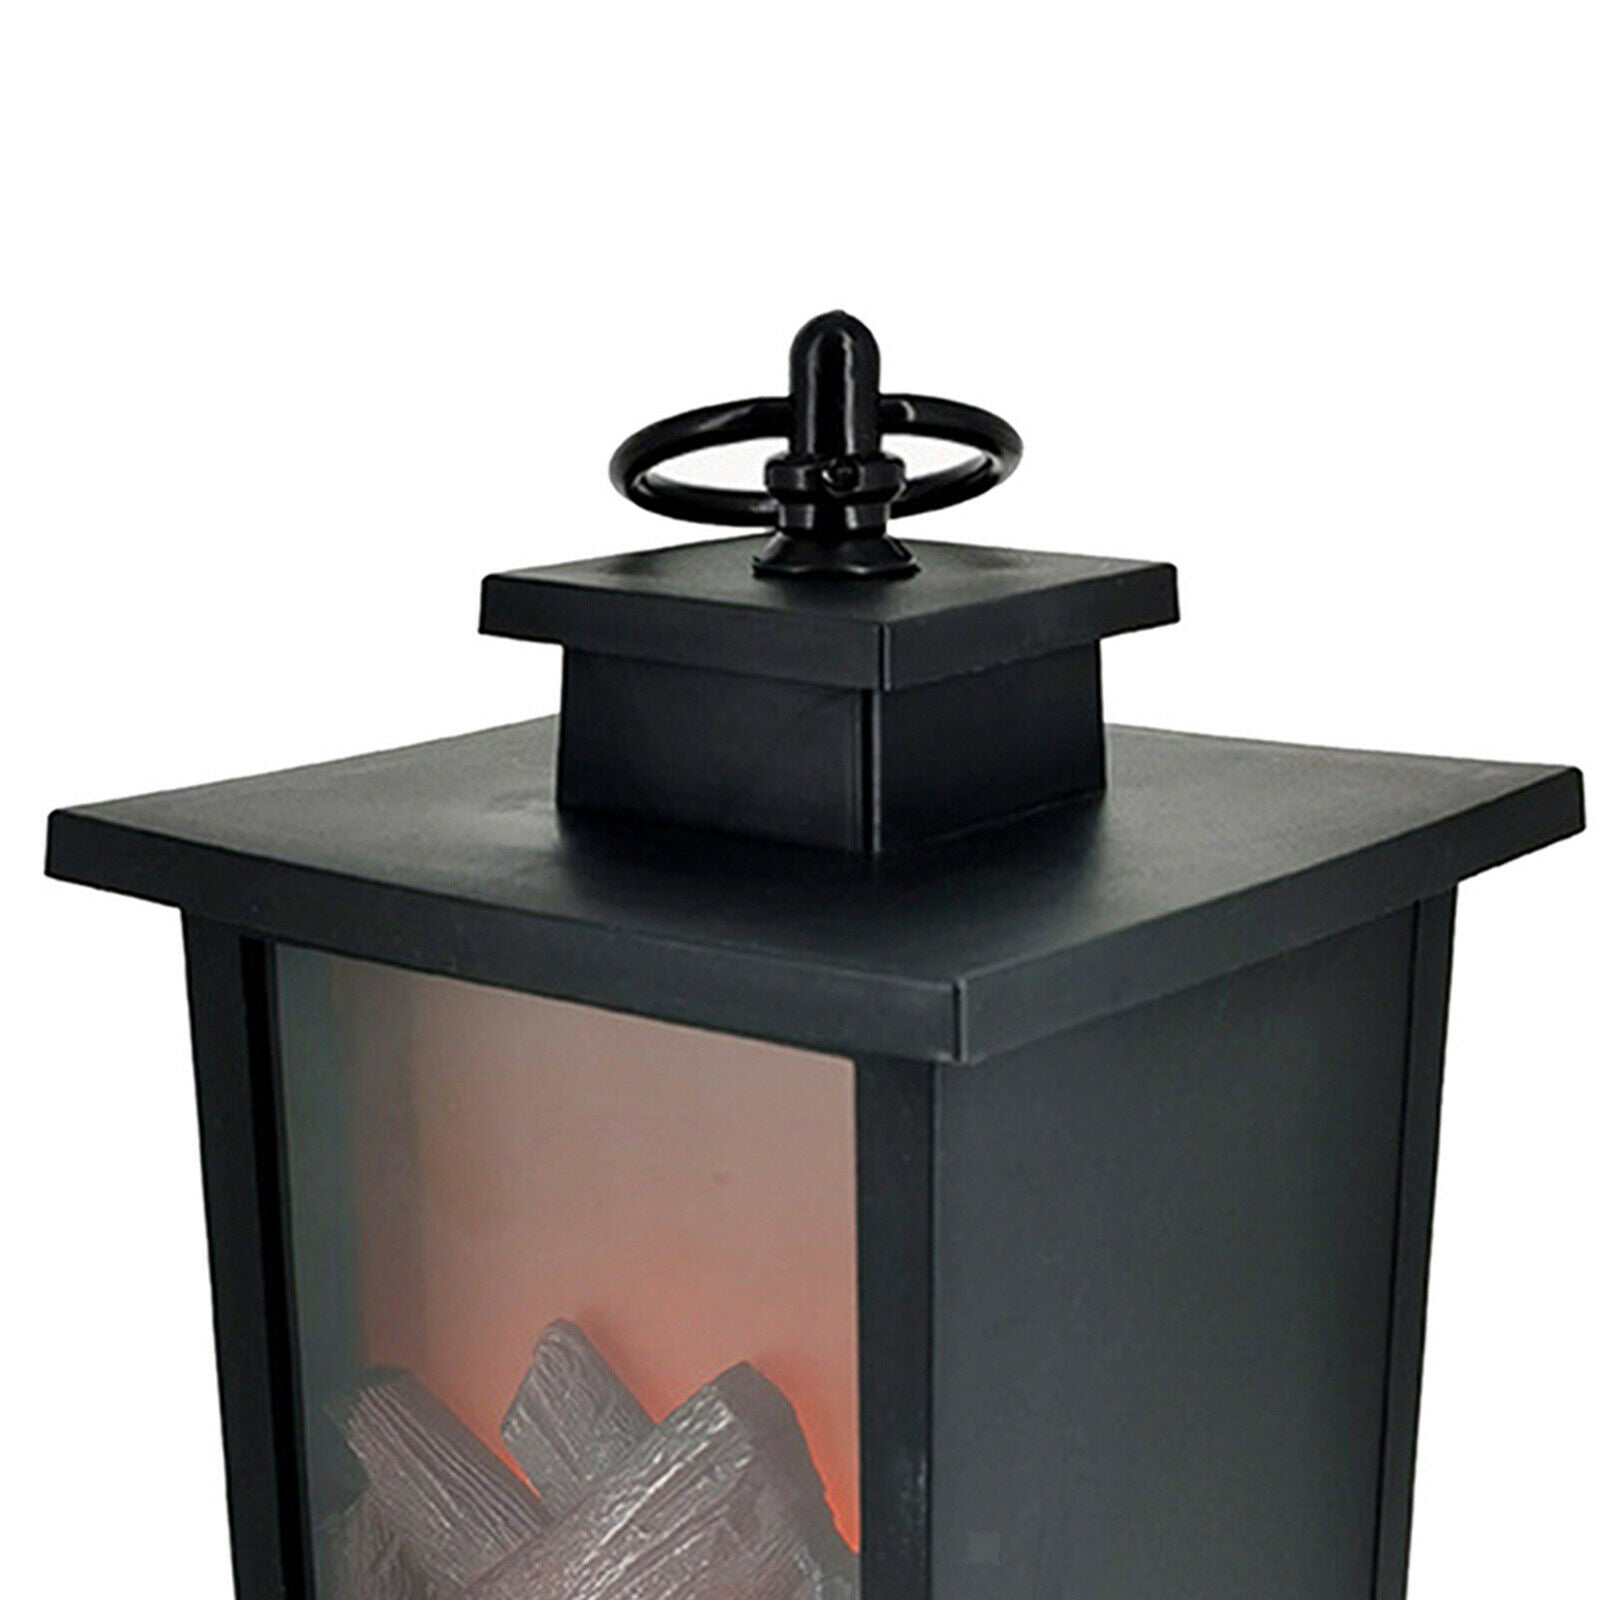 Battery Powered Table Fireplace Lantern Lamp Decorative LED Light for Garden